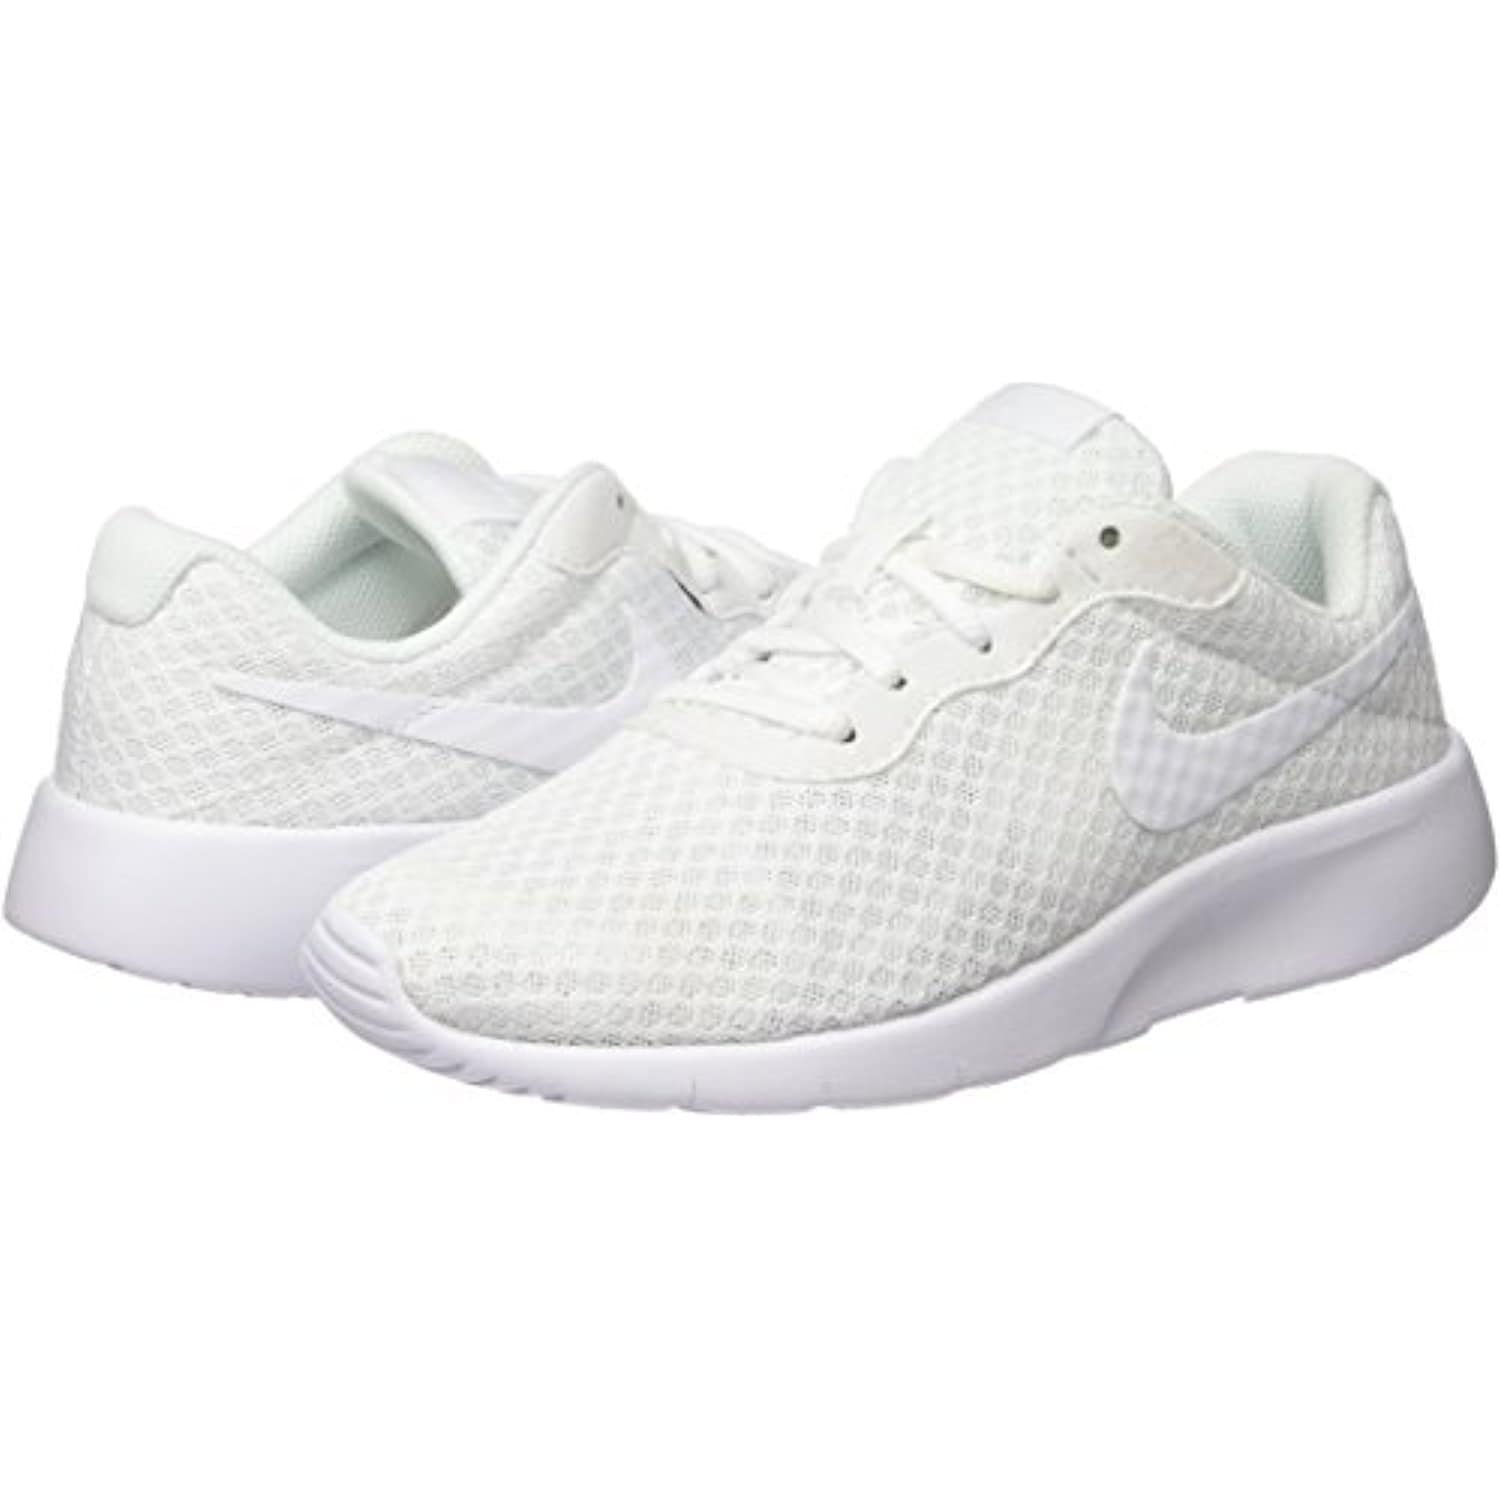 Shop Black Friday Deals on Nike Youth Tanjun White Mesh Trainers 35.5 EU -  white/white white - Overstock - 18279171